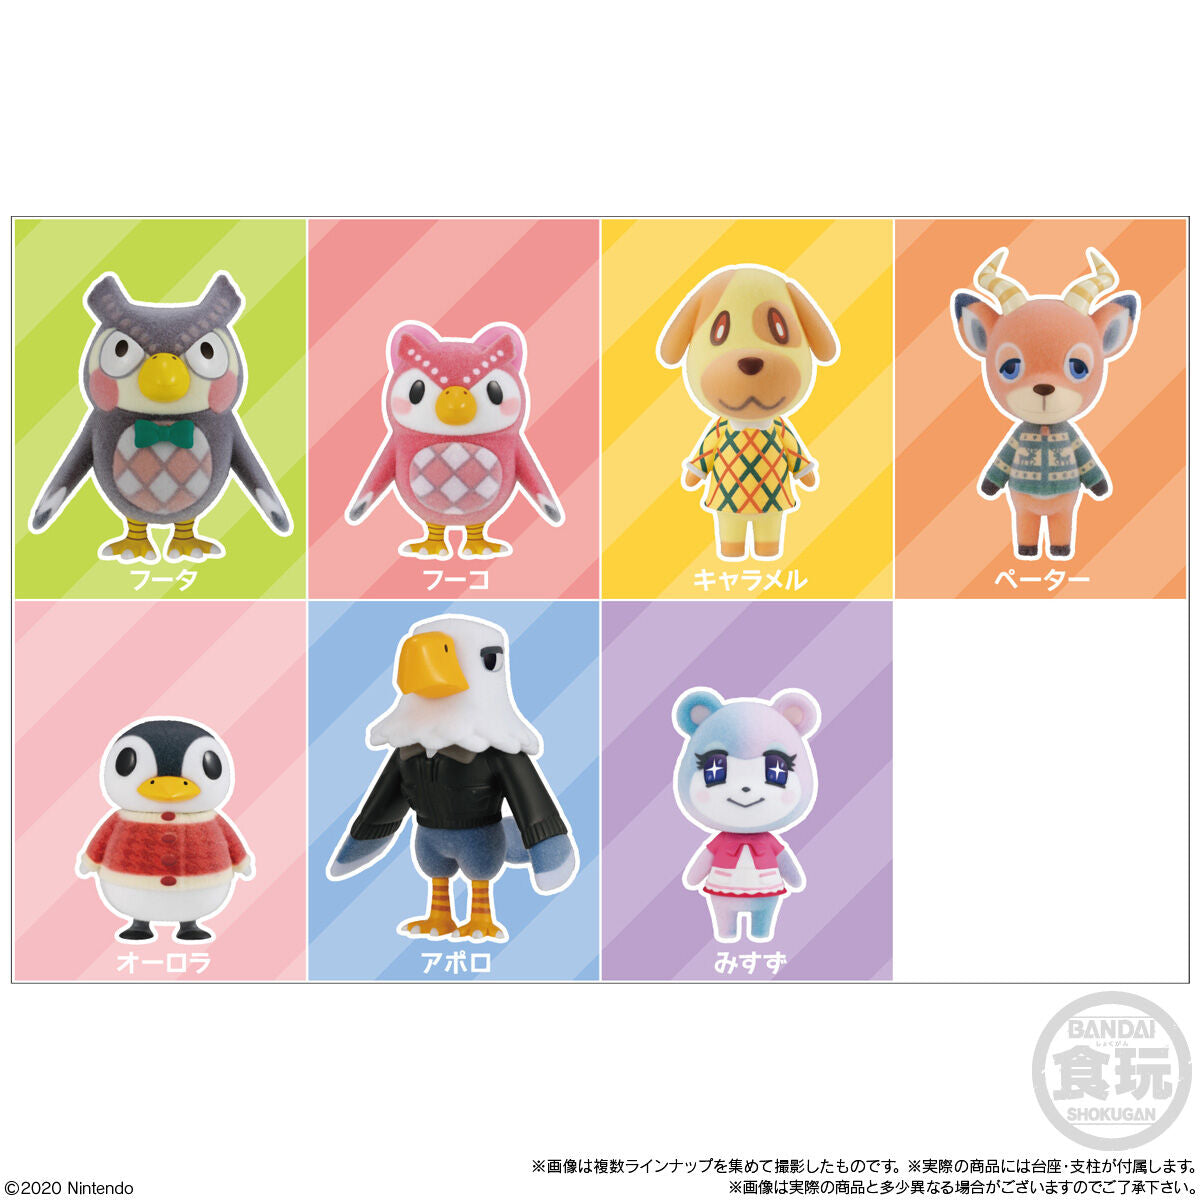 "Animal Crossing New Horizons" - Friend Doll Vol.3